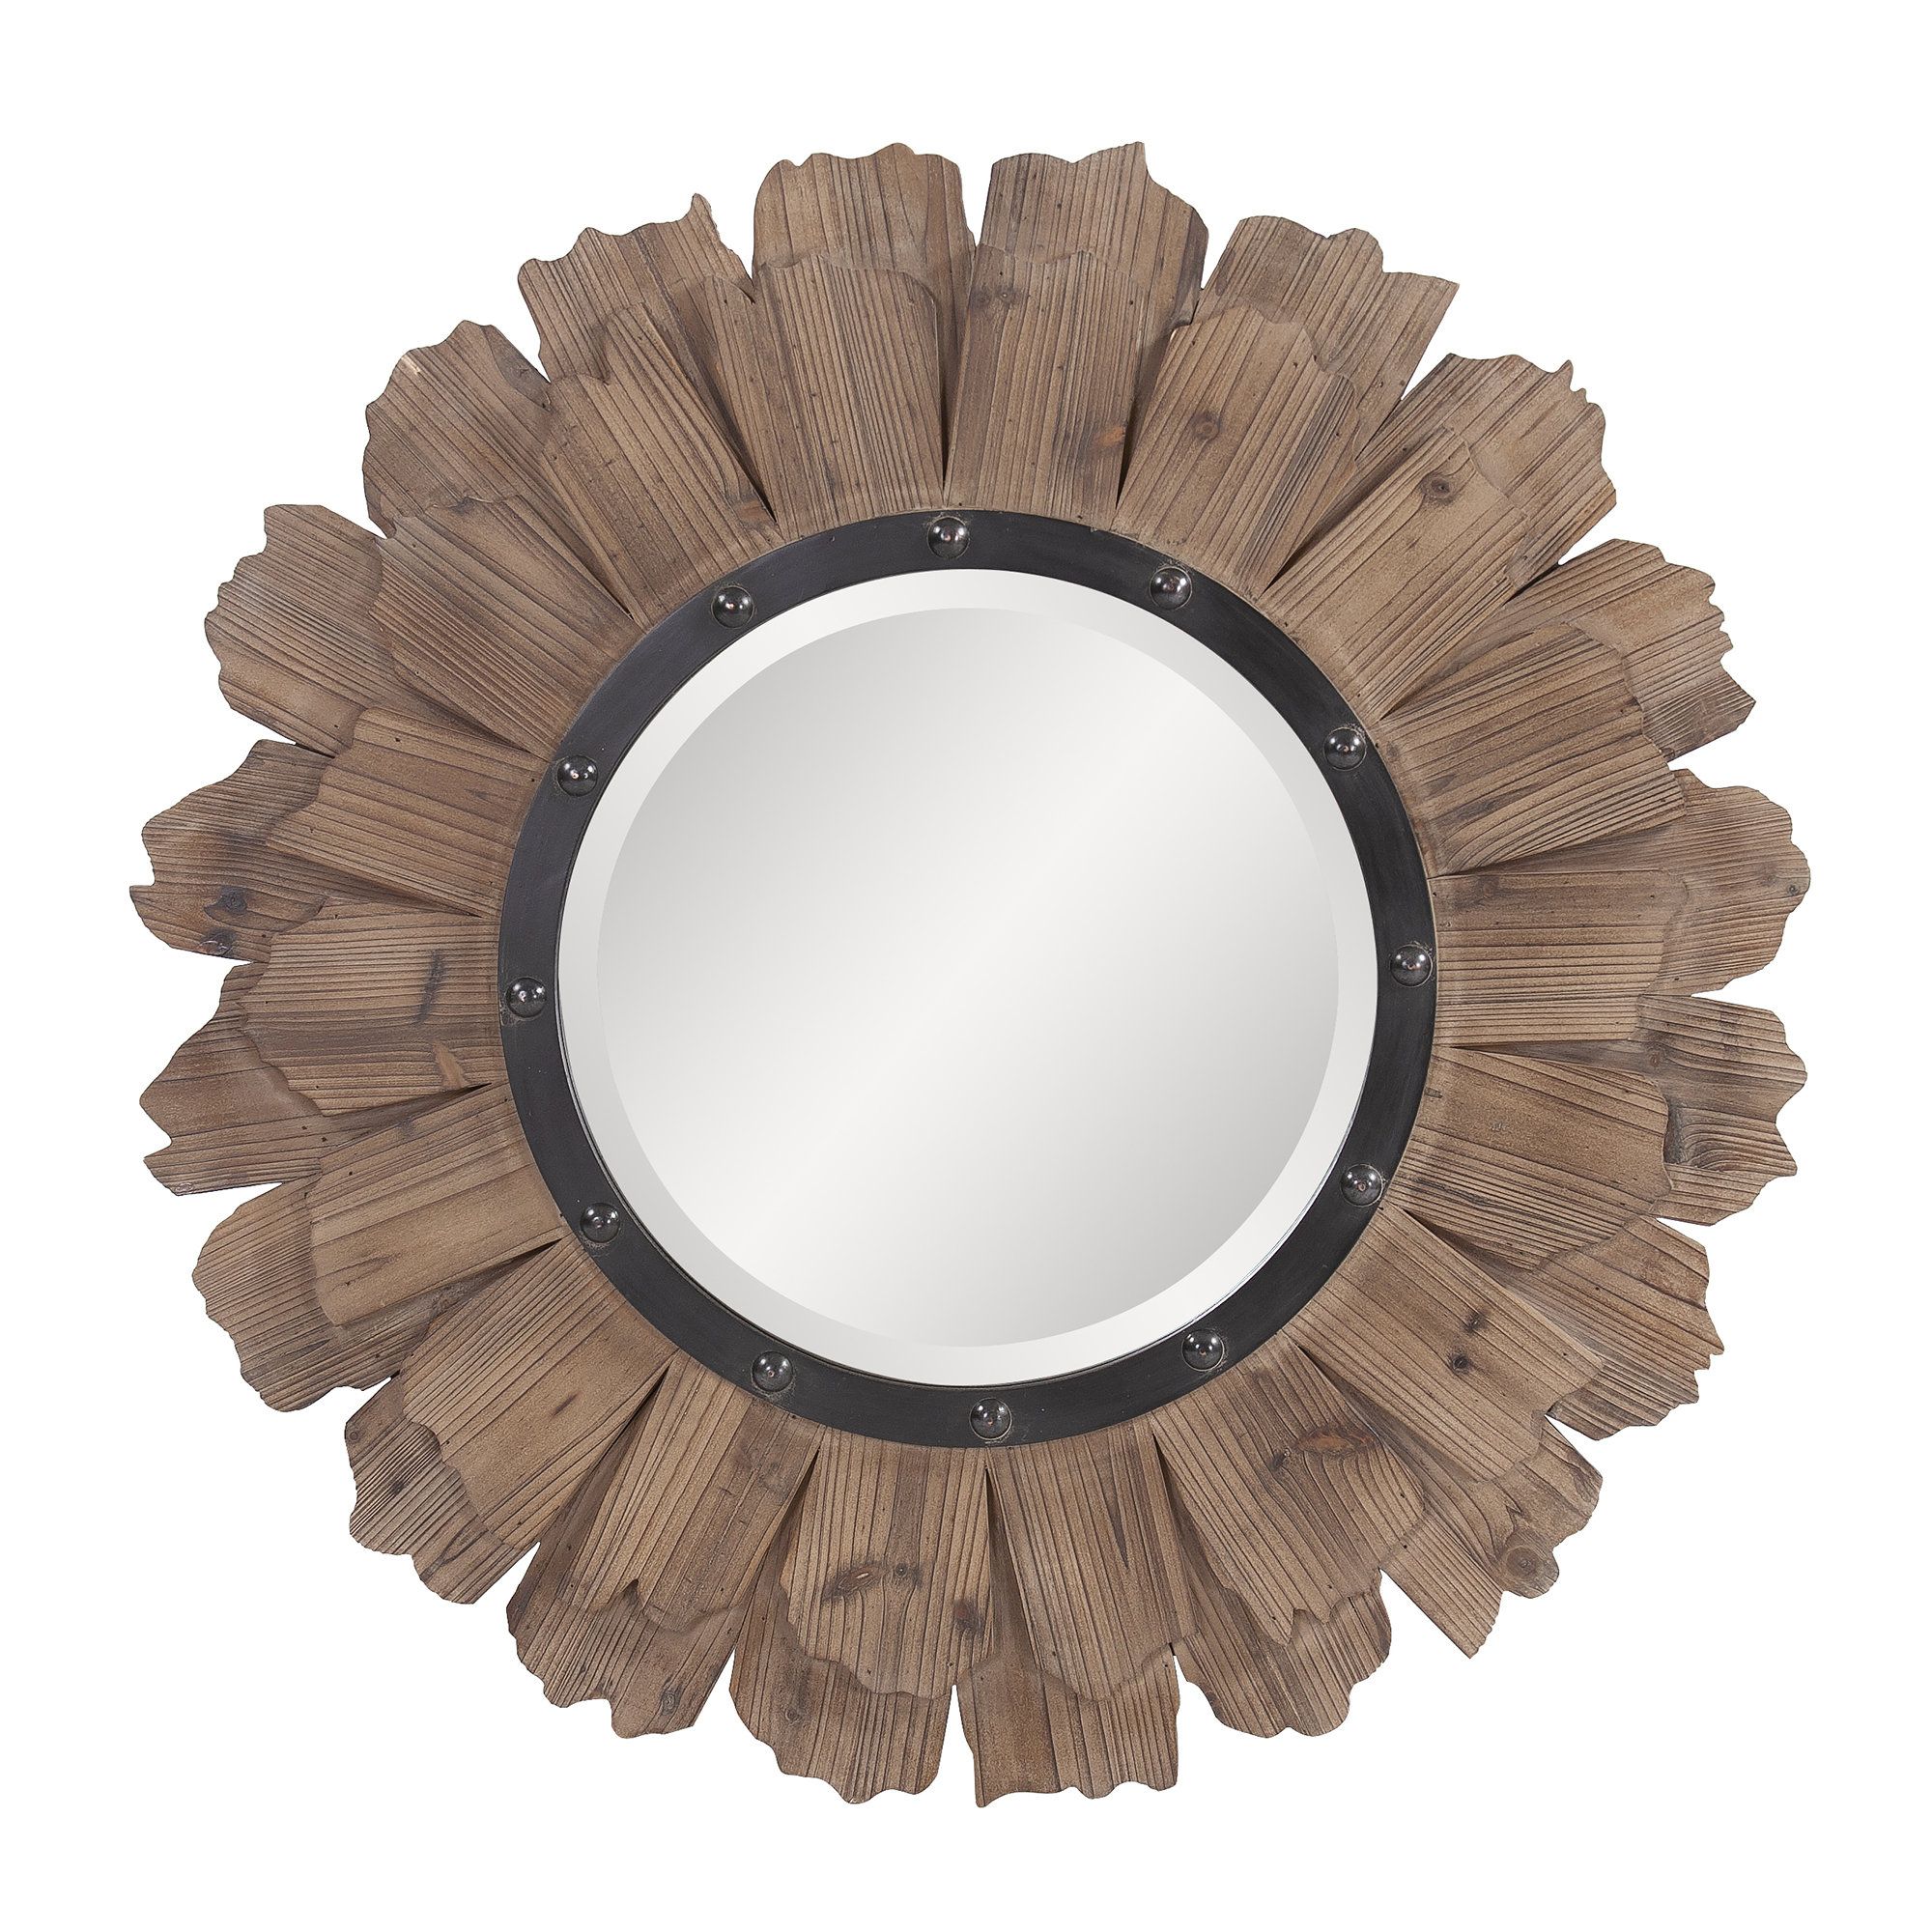 Perillo Burst Wood Accent Mirrors With Regard To Fashionable Sunburst Accent Mirror (View 14 of 20)